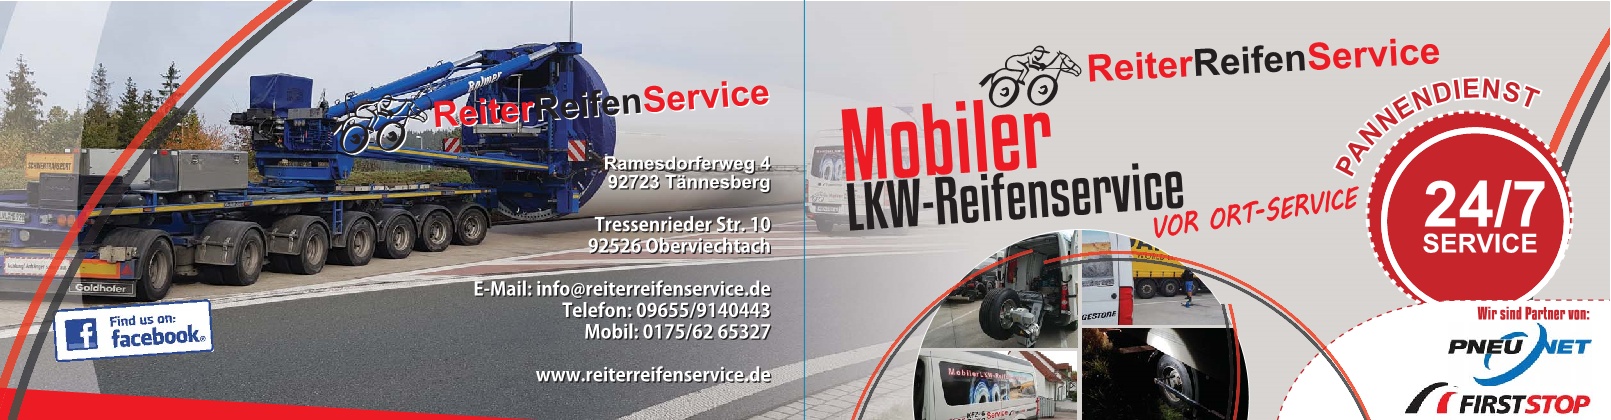 Mobiler LKW Reifenservice - Flyer